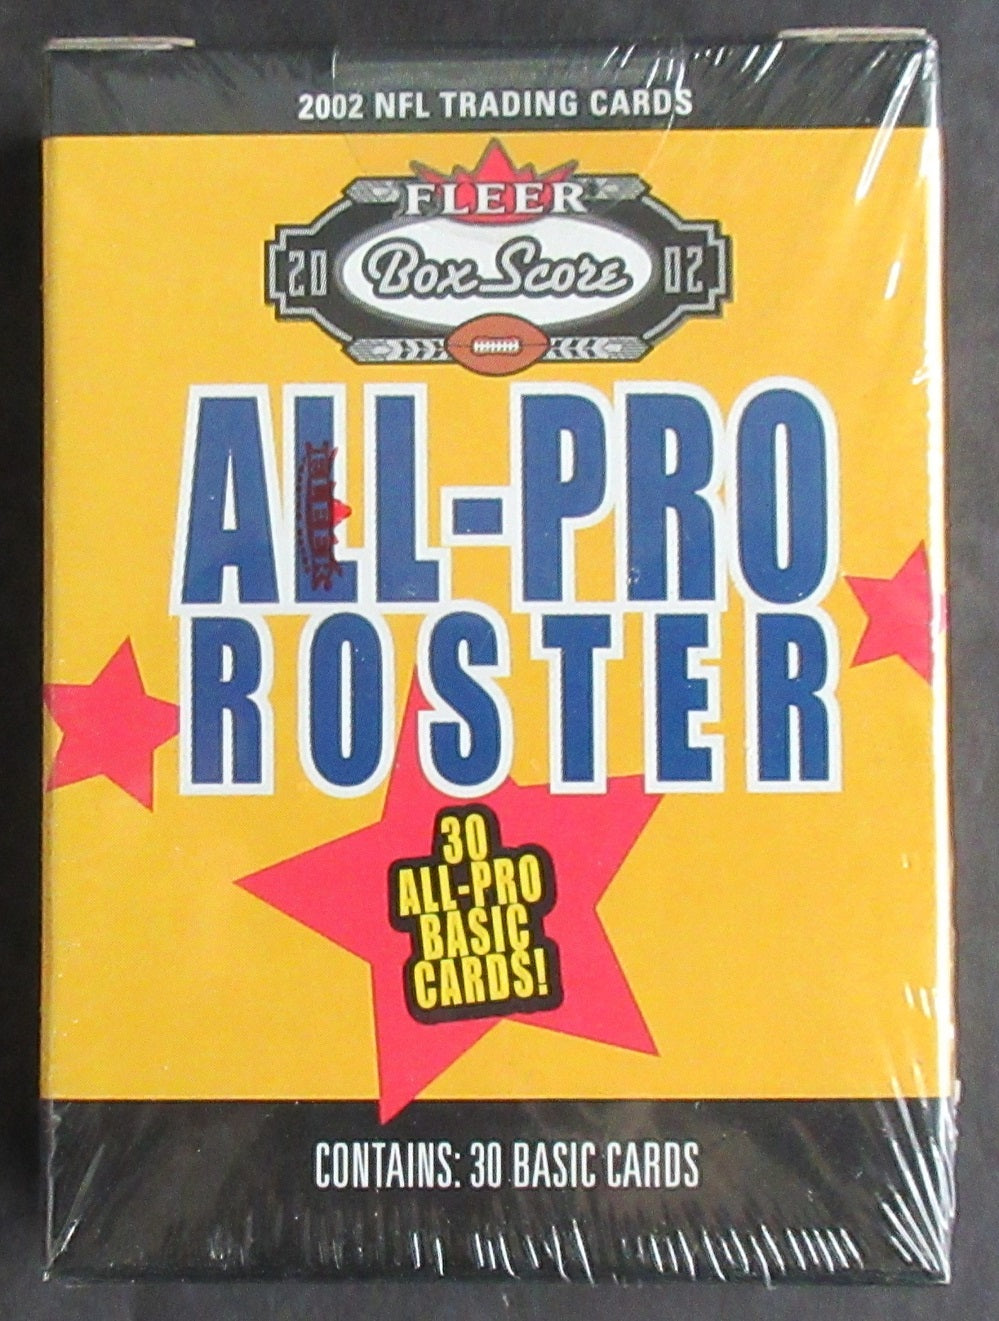 2002 Fleer Football Box Score All-Pro Roster Factory Set (30)